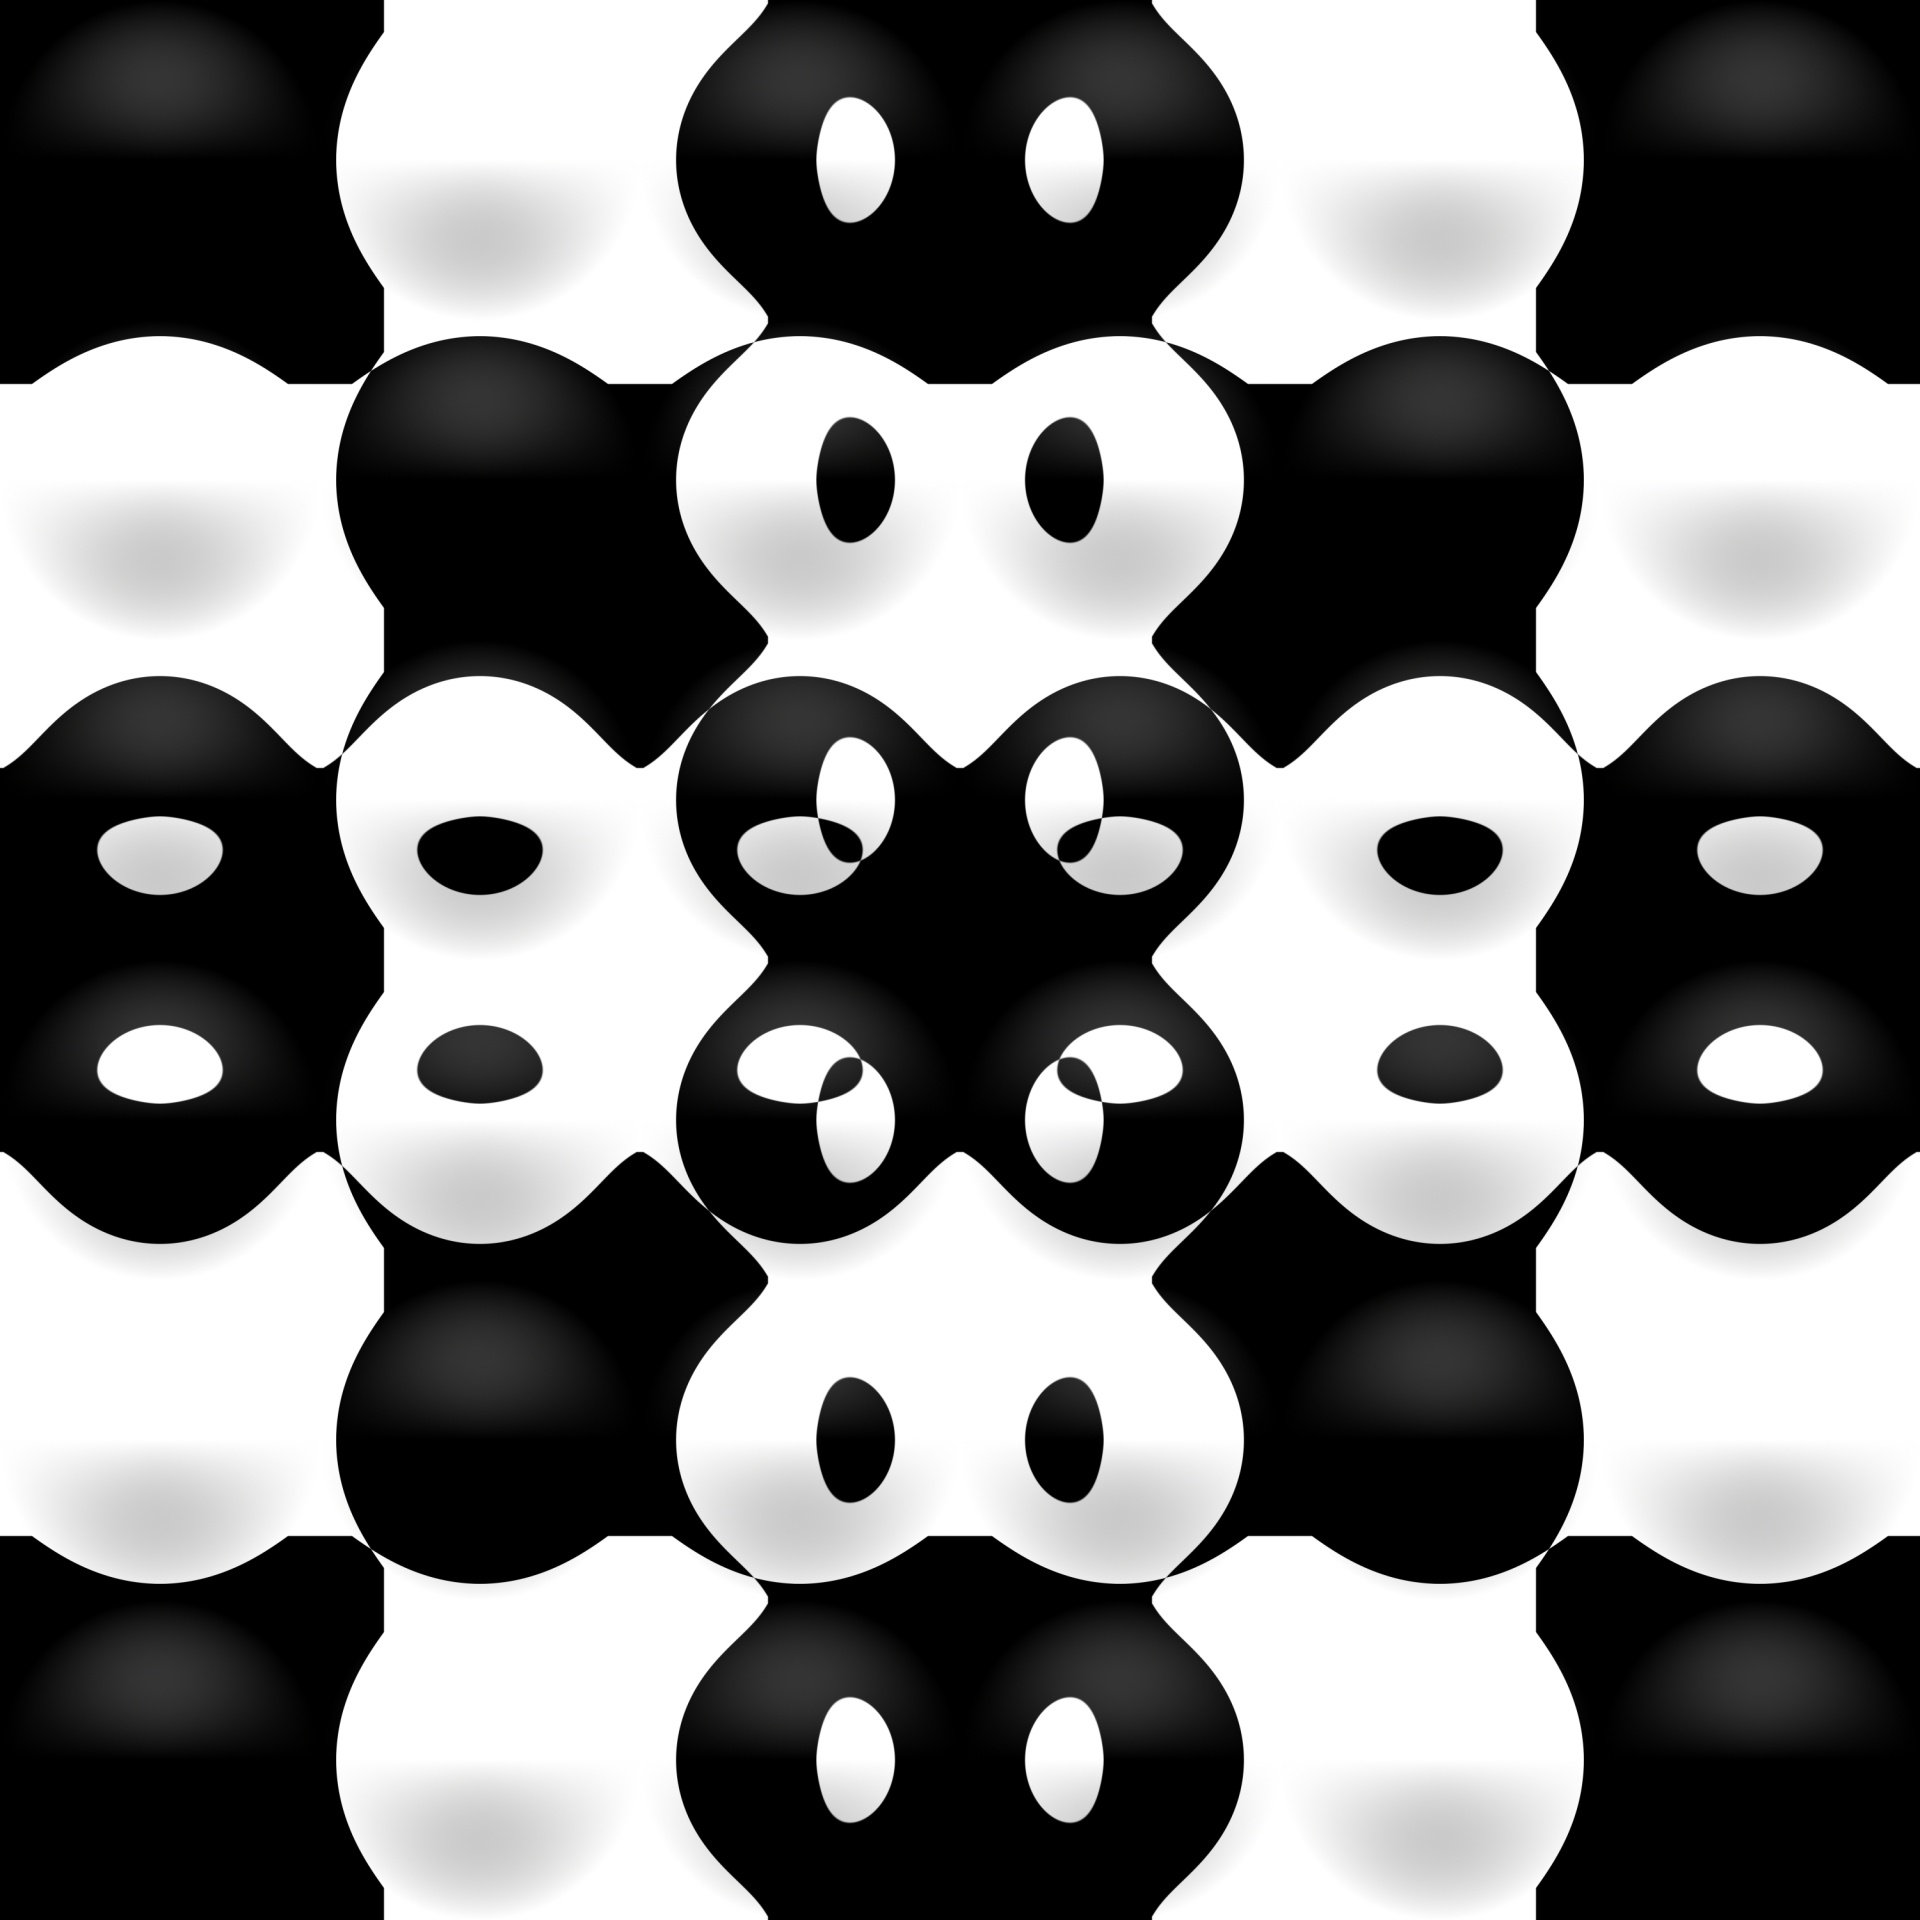 Distorted Checker